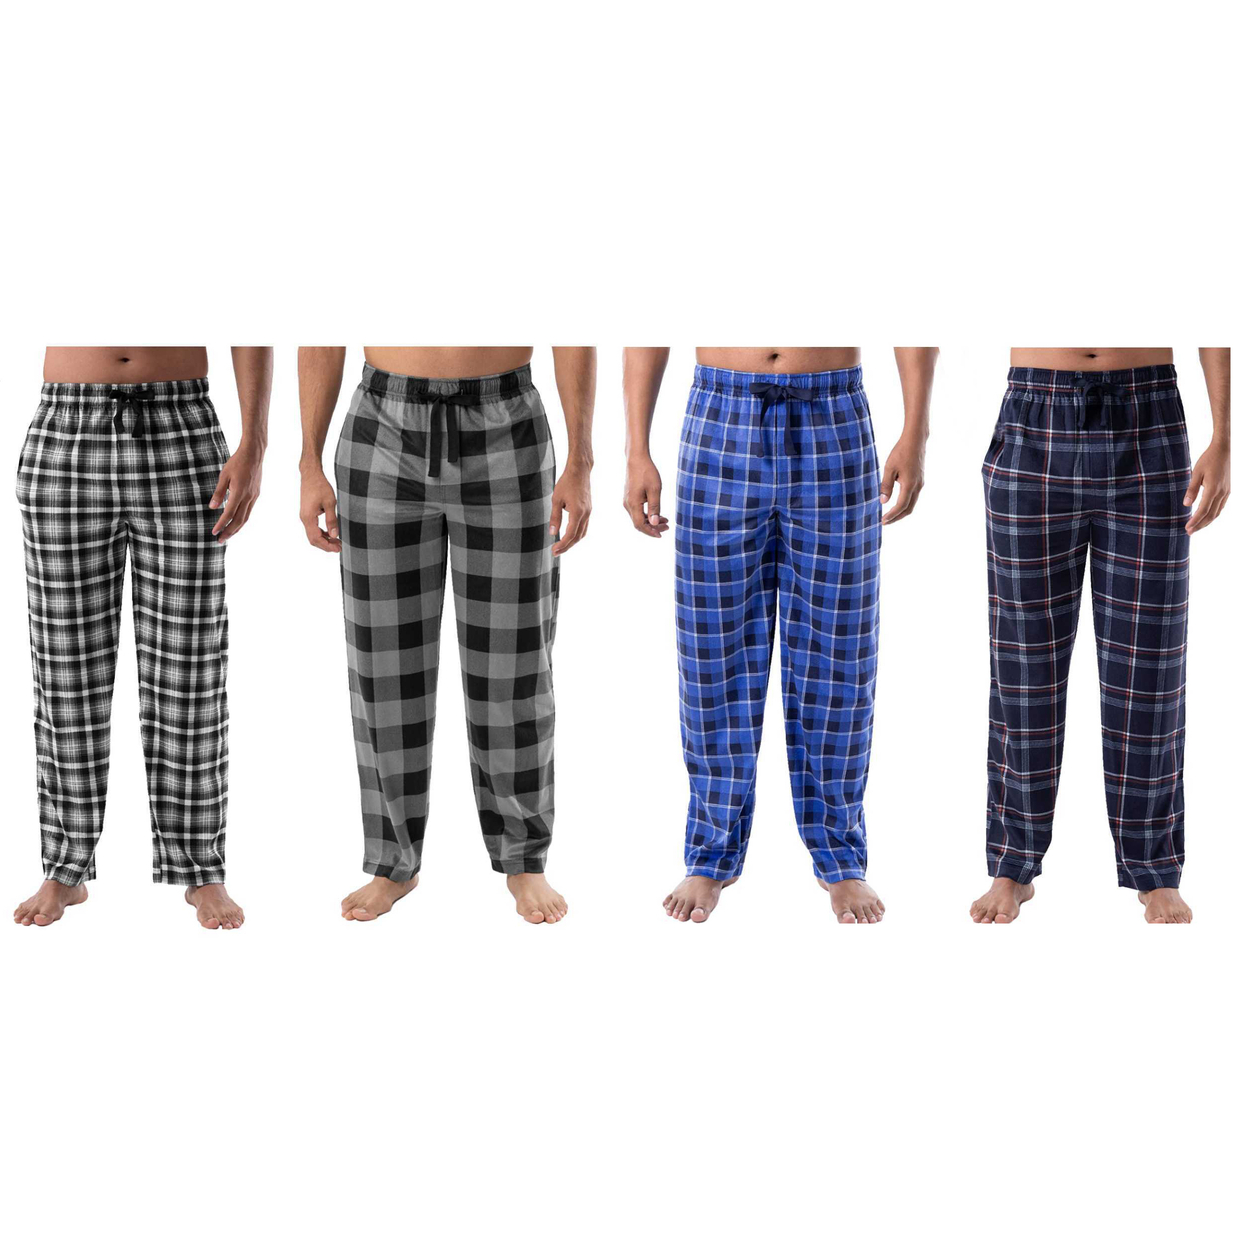 4-Pack: Men's Ultra-Soft Cozy Lounge Sleep Micro Fleece Plaid Pajama Pants - Large